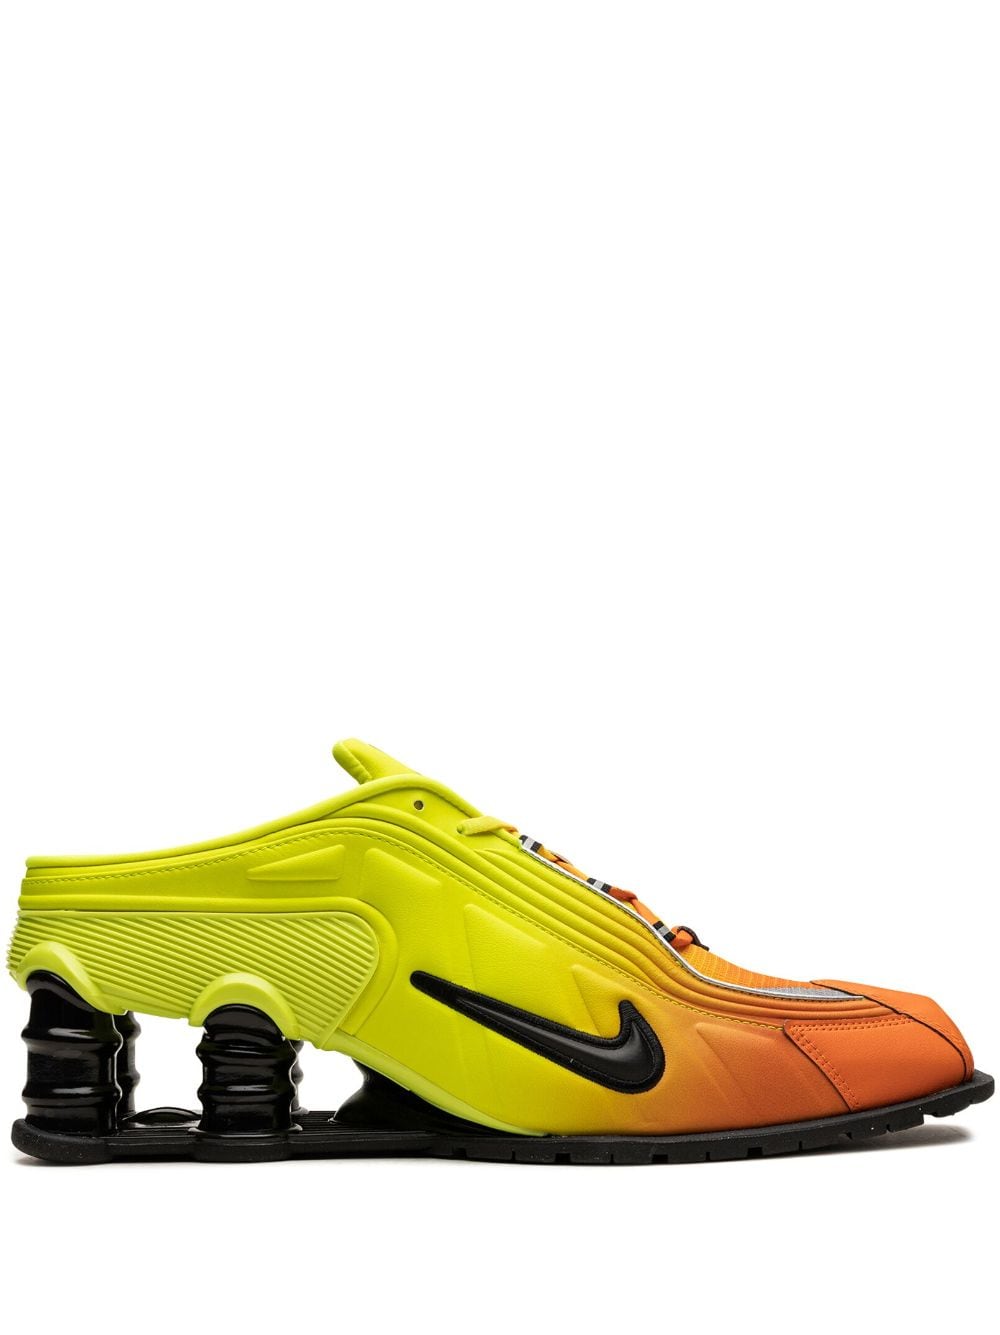 Nike x Martine Rose Shox R4 Mule "Safety Orange" sneakers - Yellow von Nike